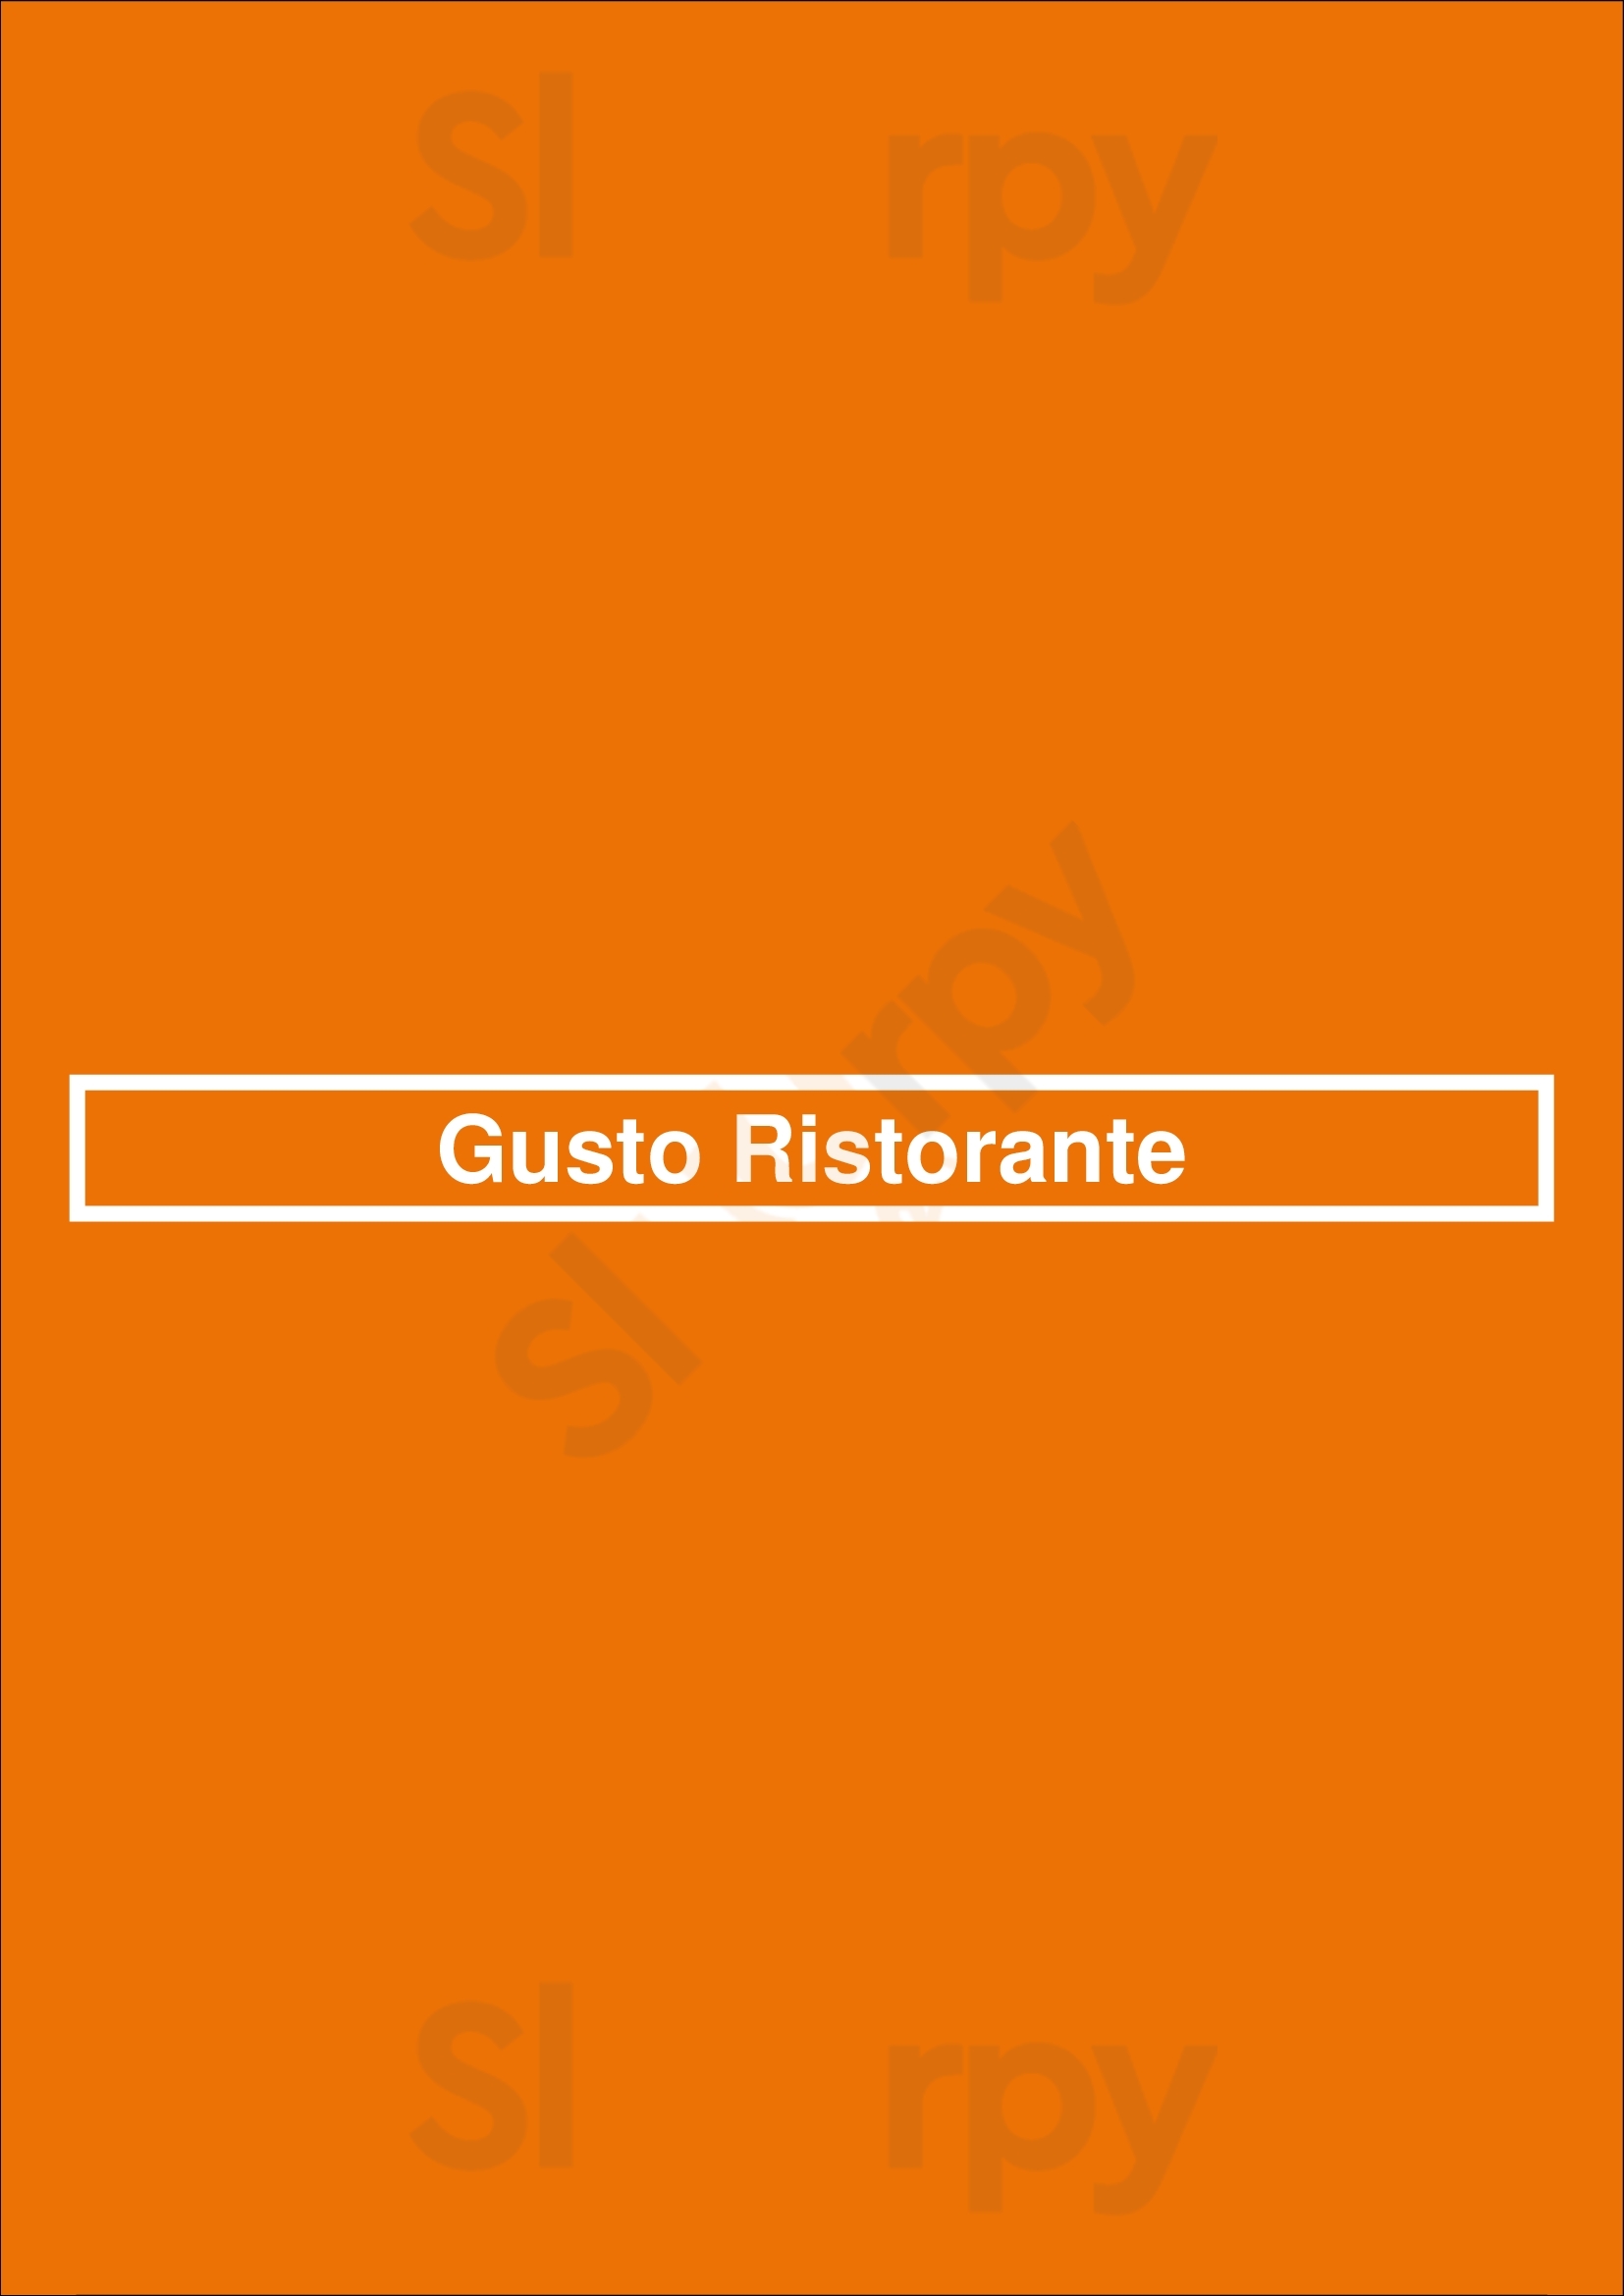 Gusto Ristorante Hilton Head Menu - 1